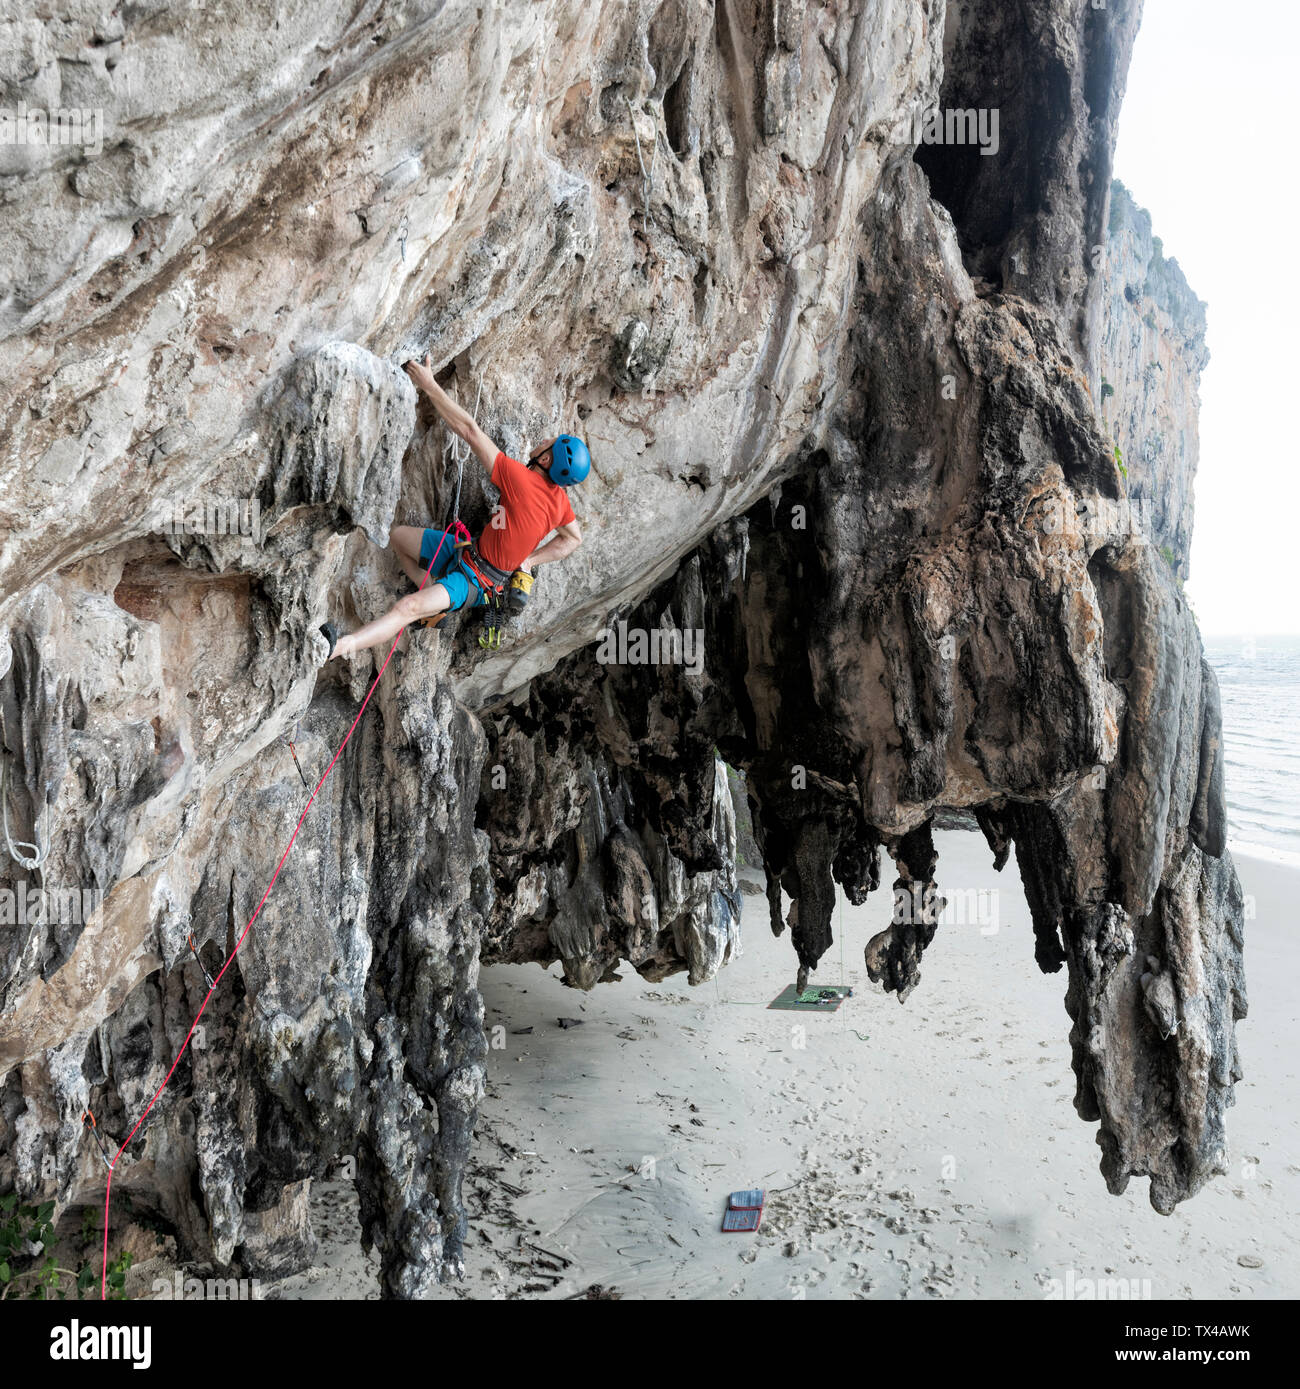 Thailand, Krabi, Lao liang island, climber in rock wall Stock Photo